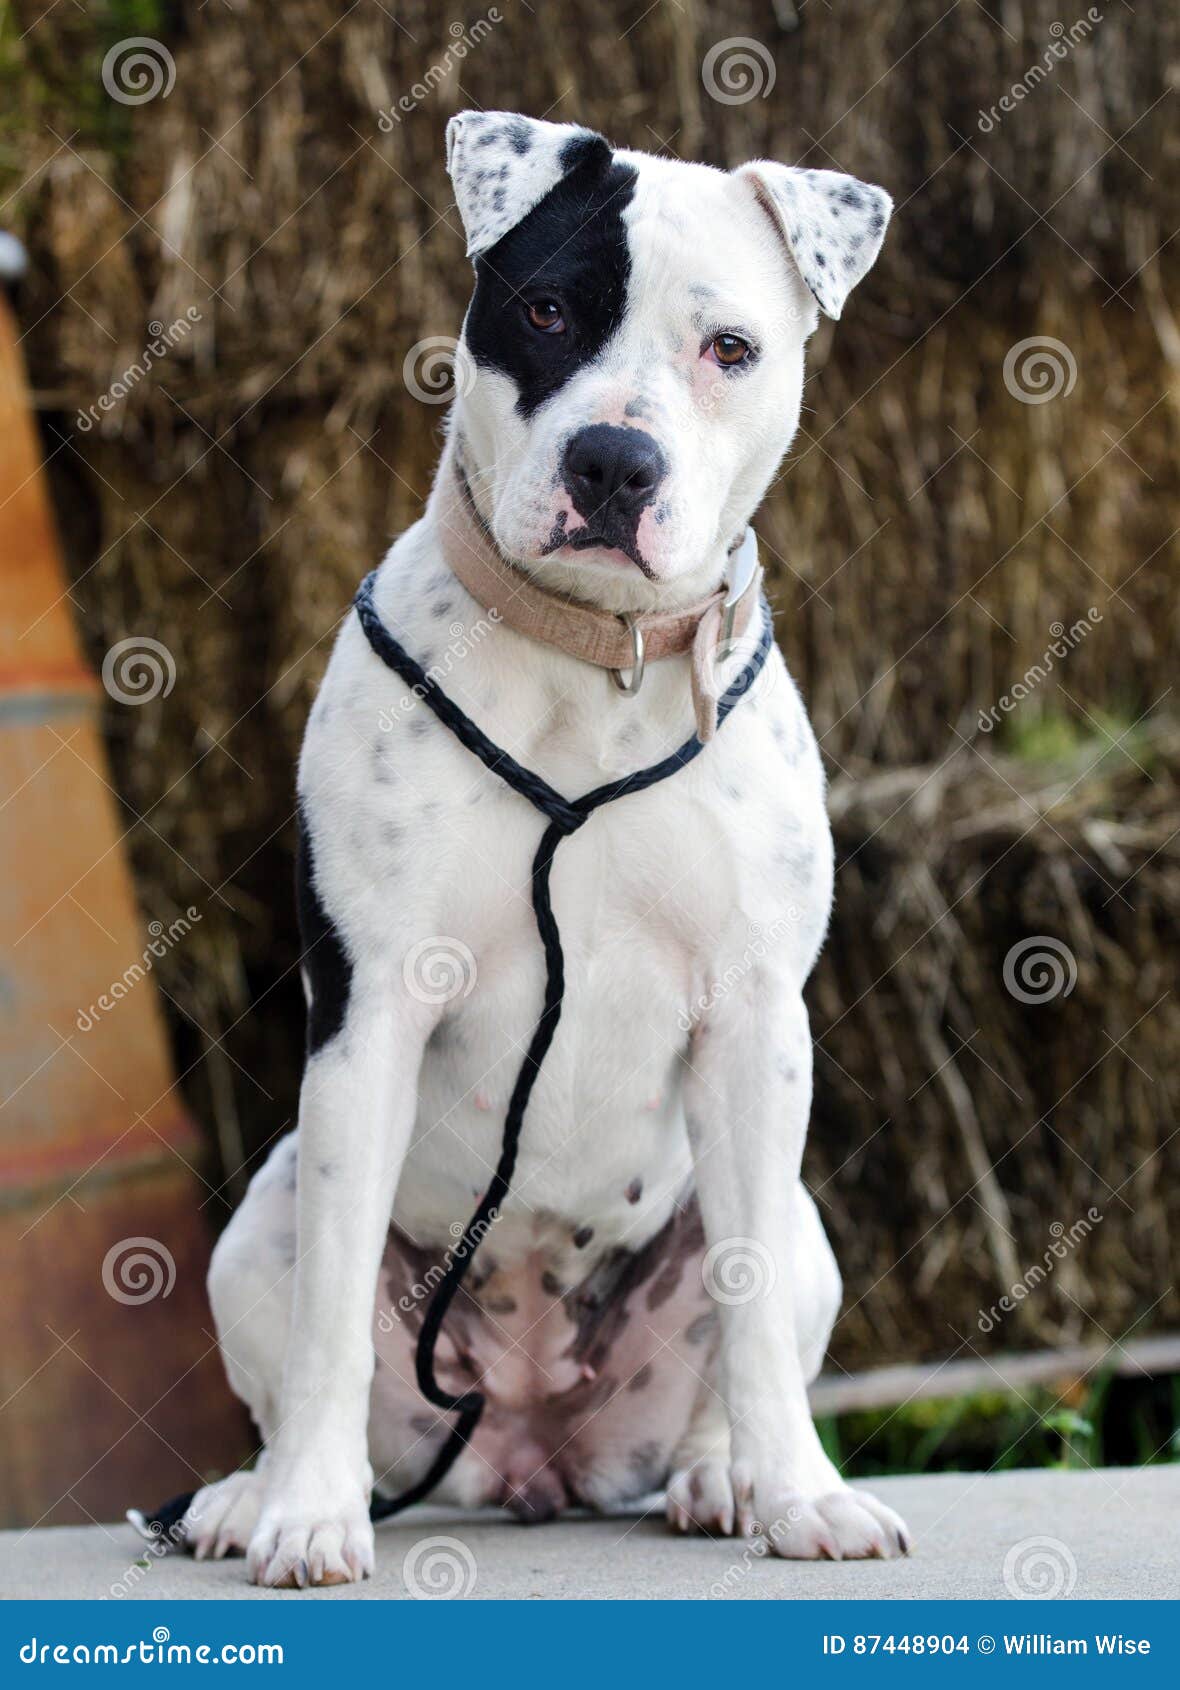 White Pitbull Dog With Black Eye Patch 